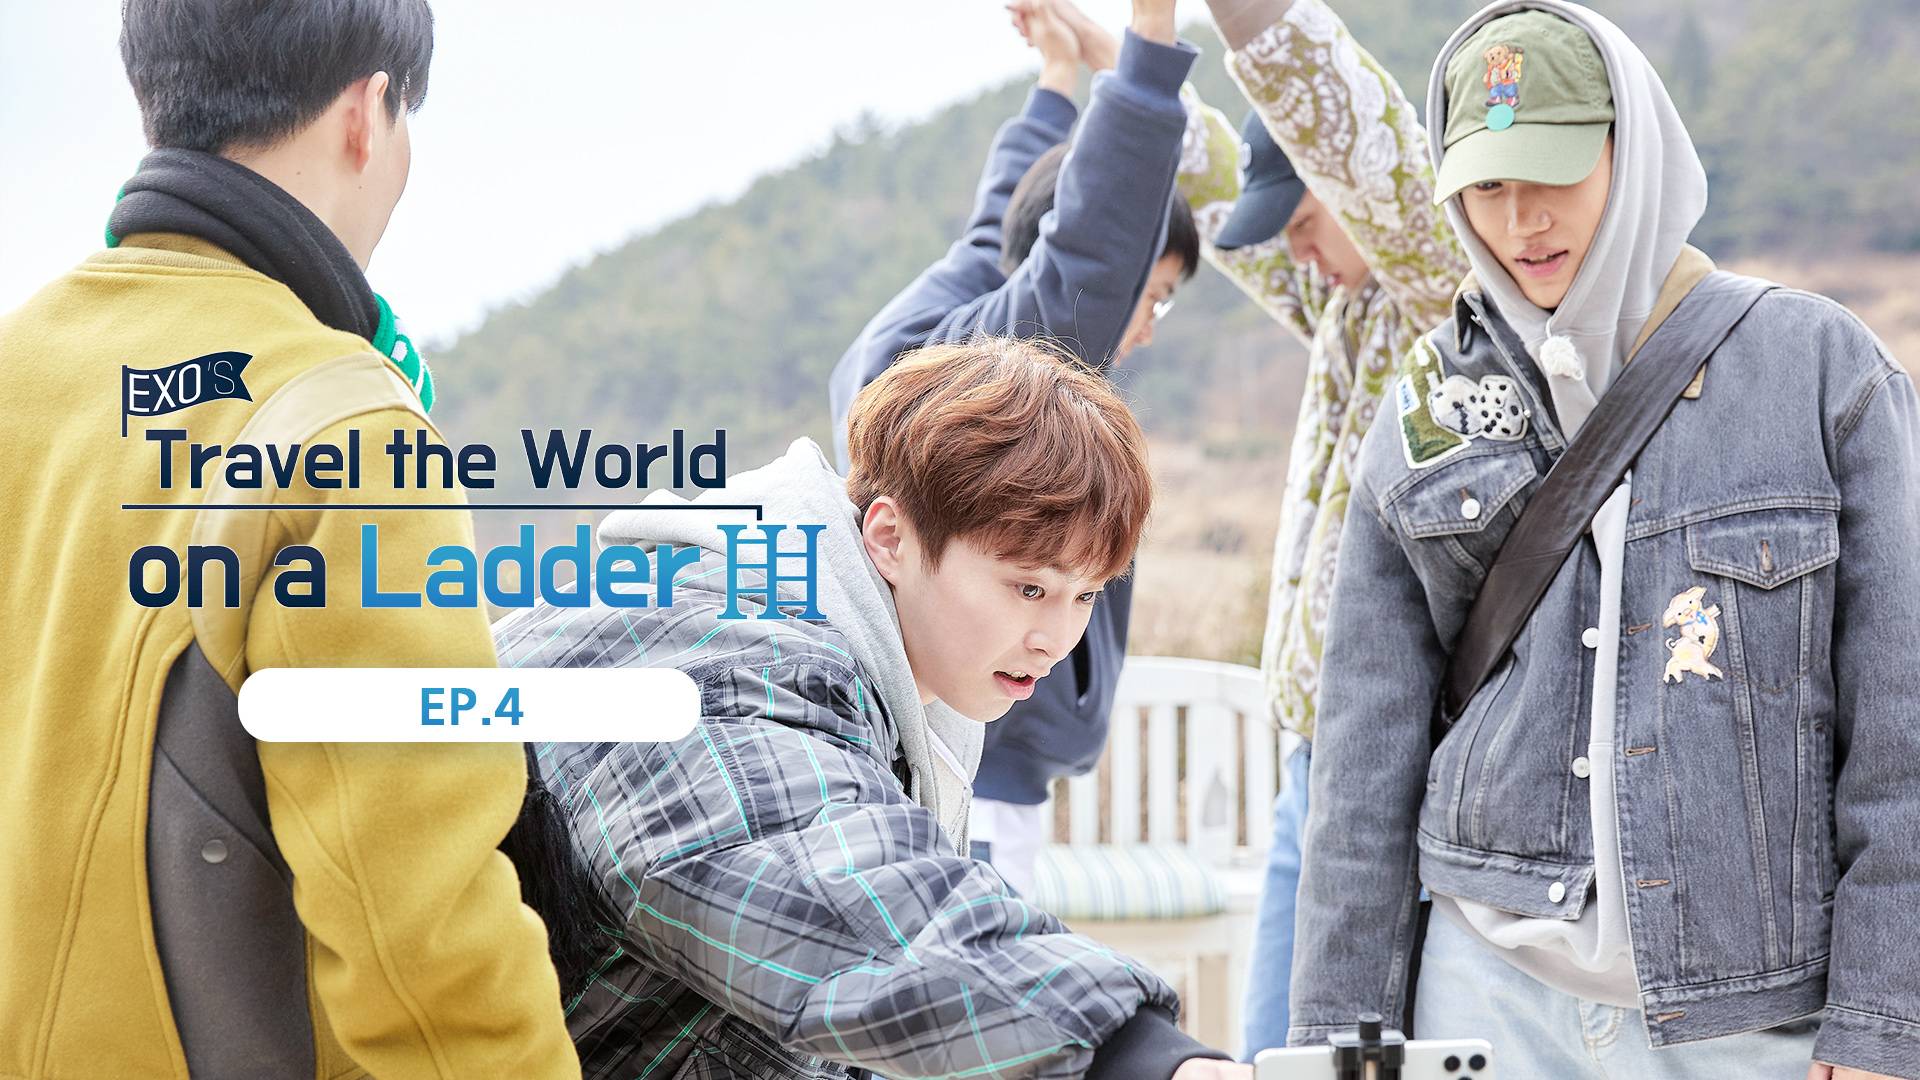 travel the world on exo's ladder season 4 episode 3